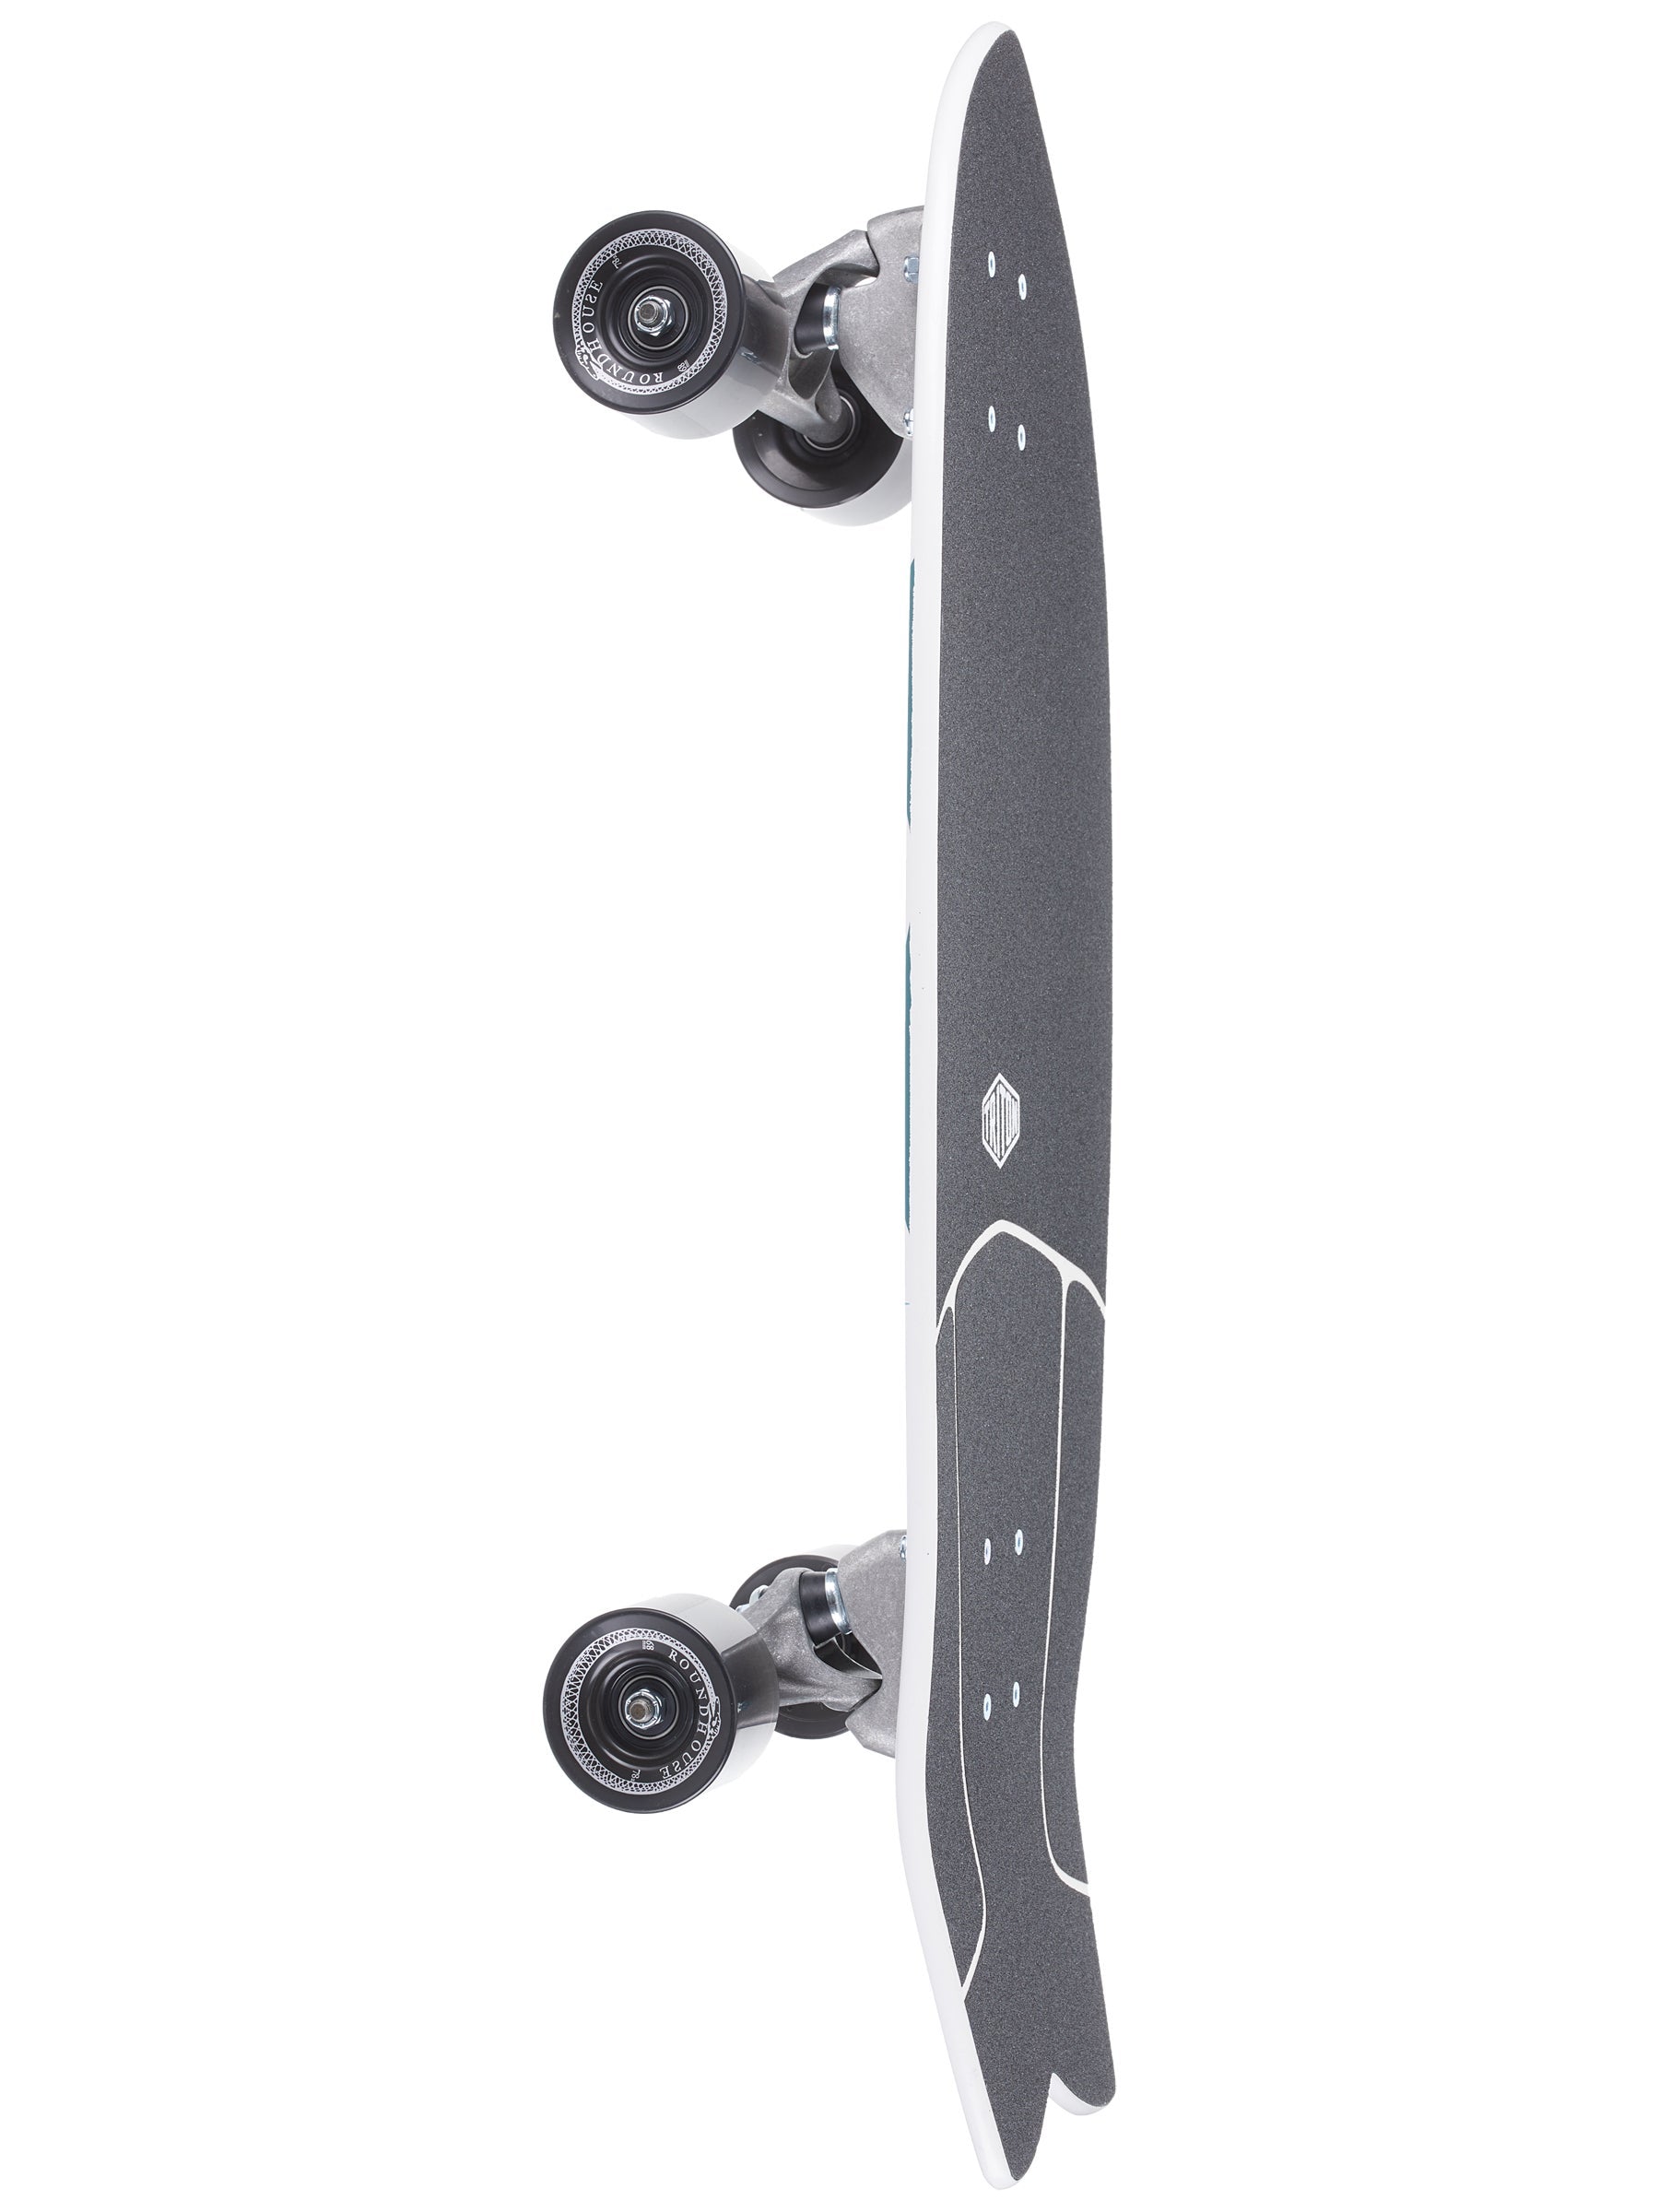 Carver Triton Astral CX Complete Surfskate Skateboard 9.75 x 29